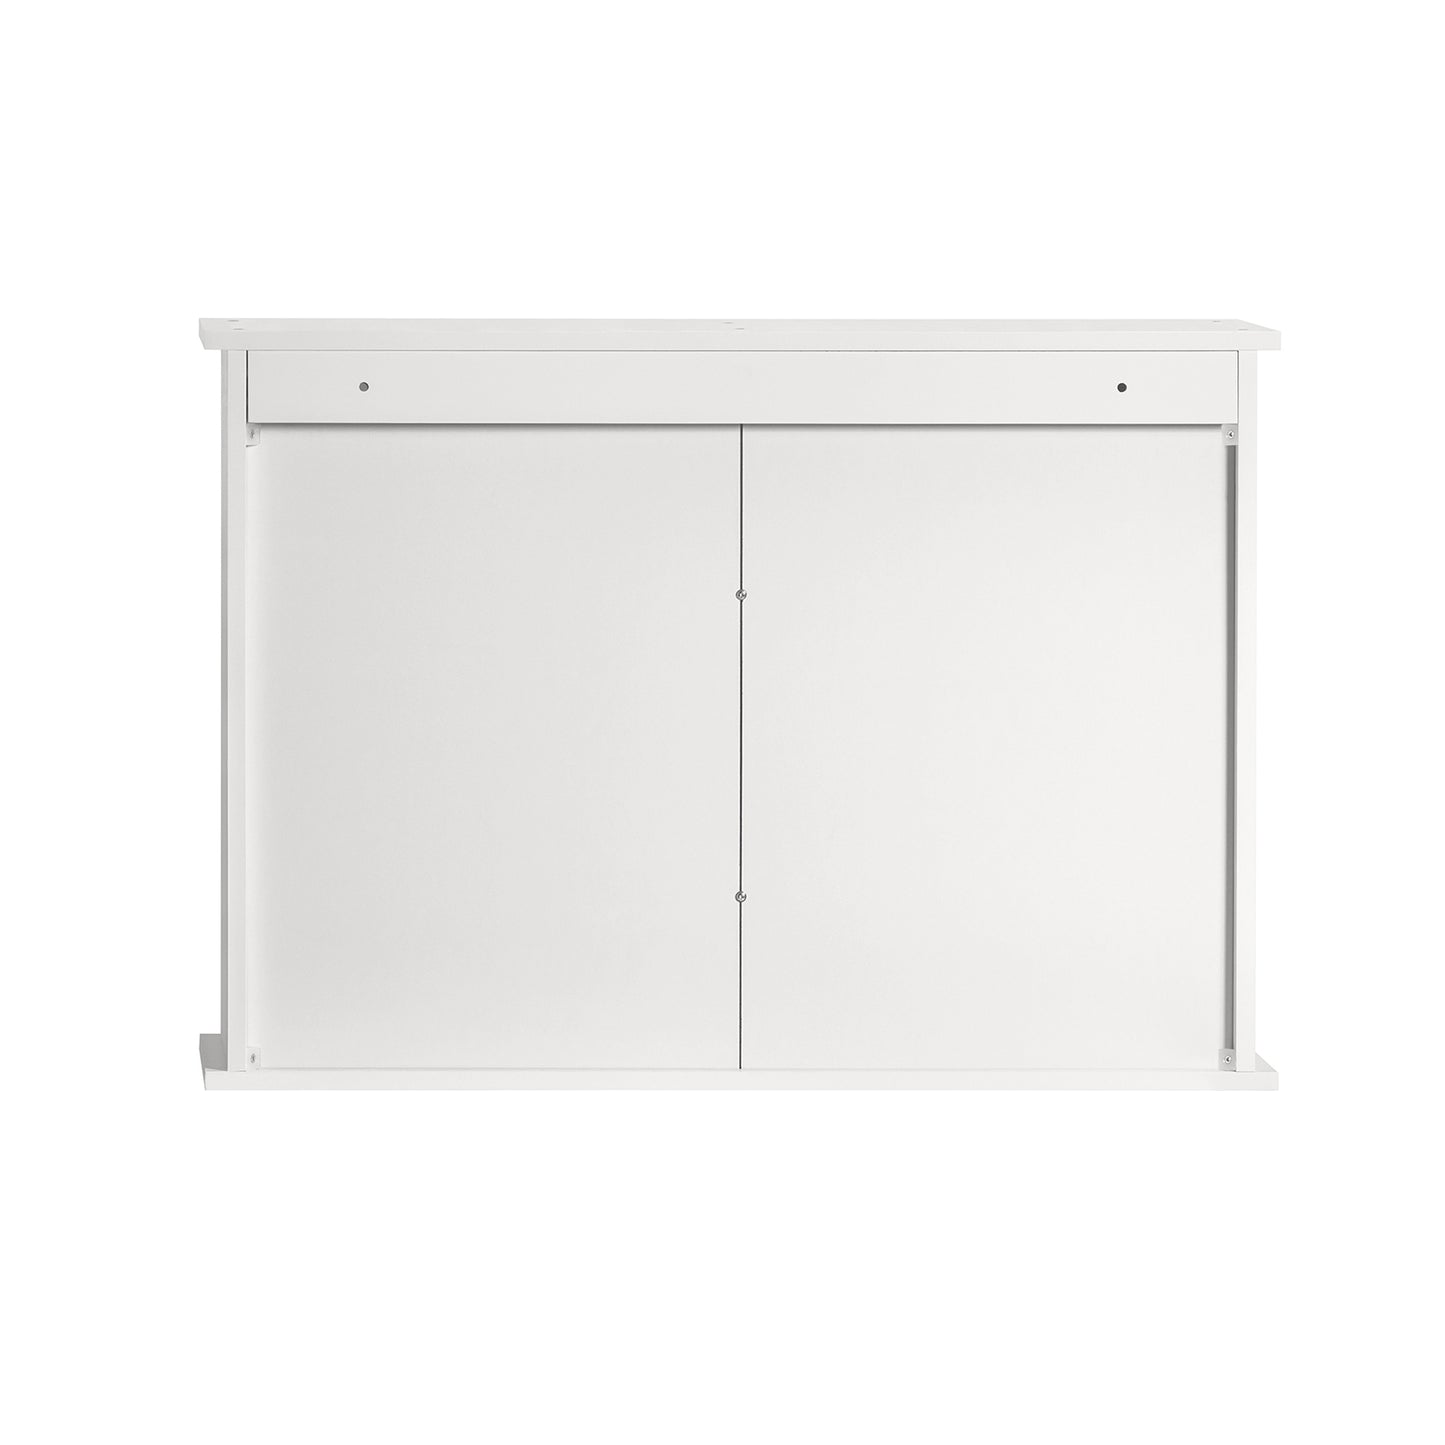 SoBuy Bathroom Wall Cabinet Medicine Cabinet Wall Mounted Storage Cabinet Cupboard with Sliding Door